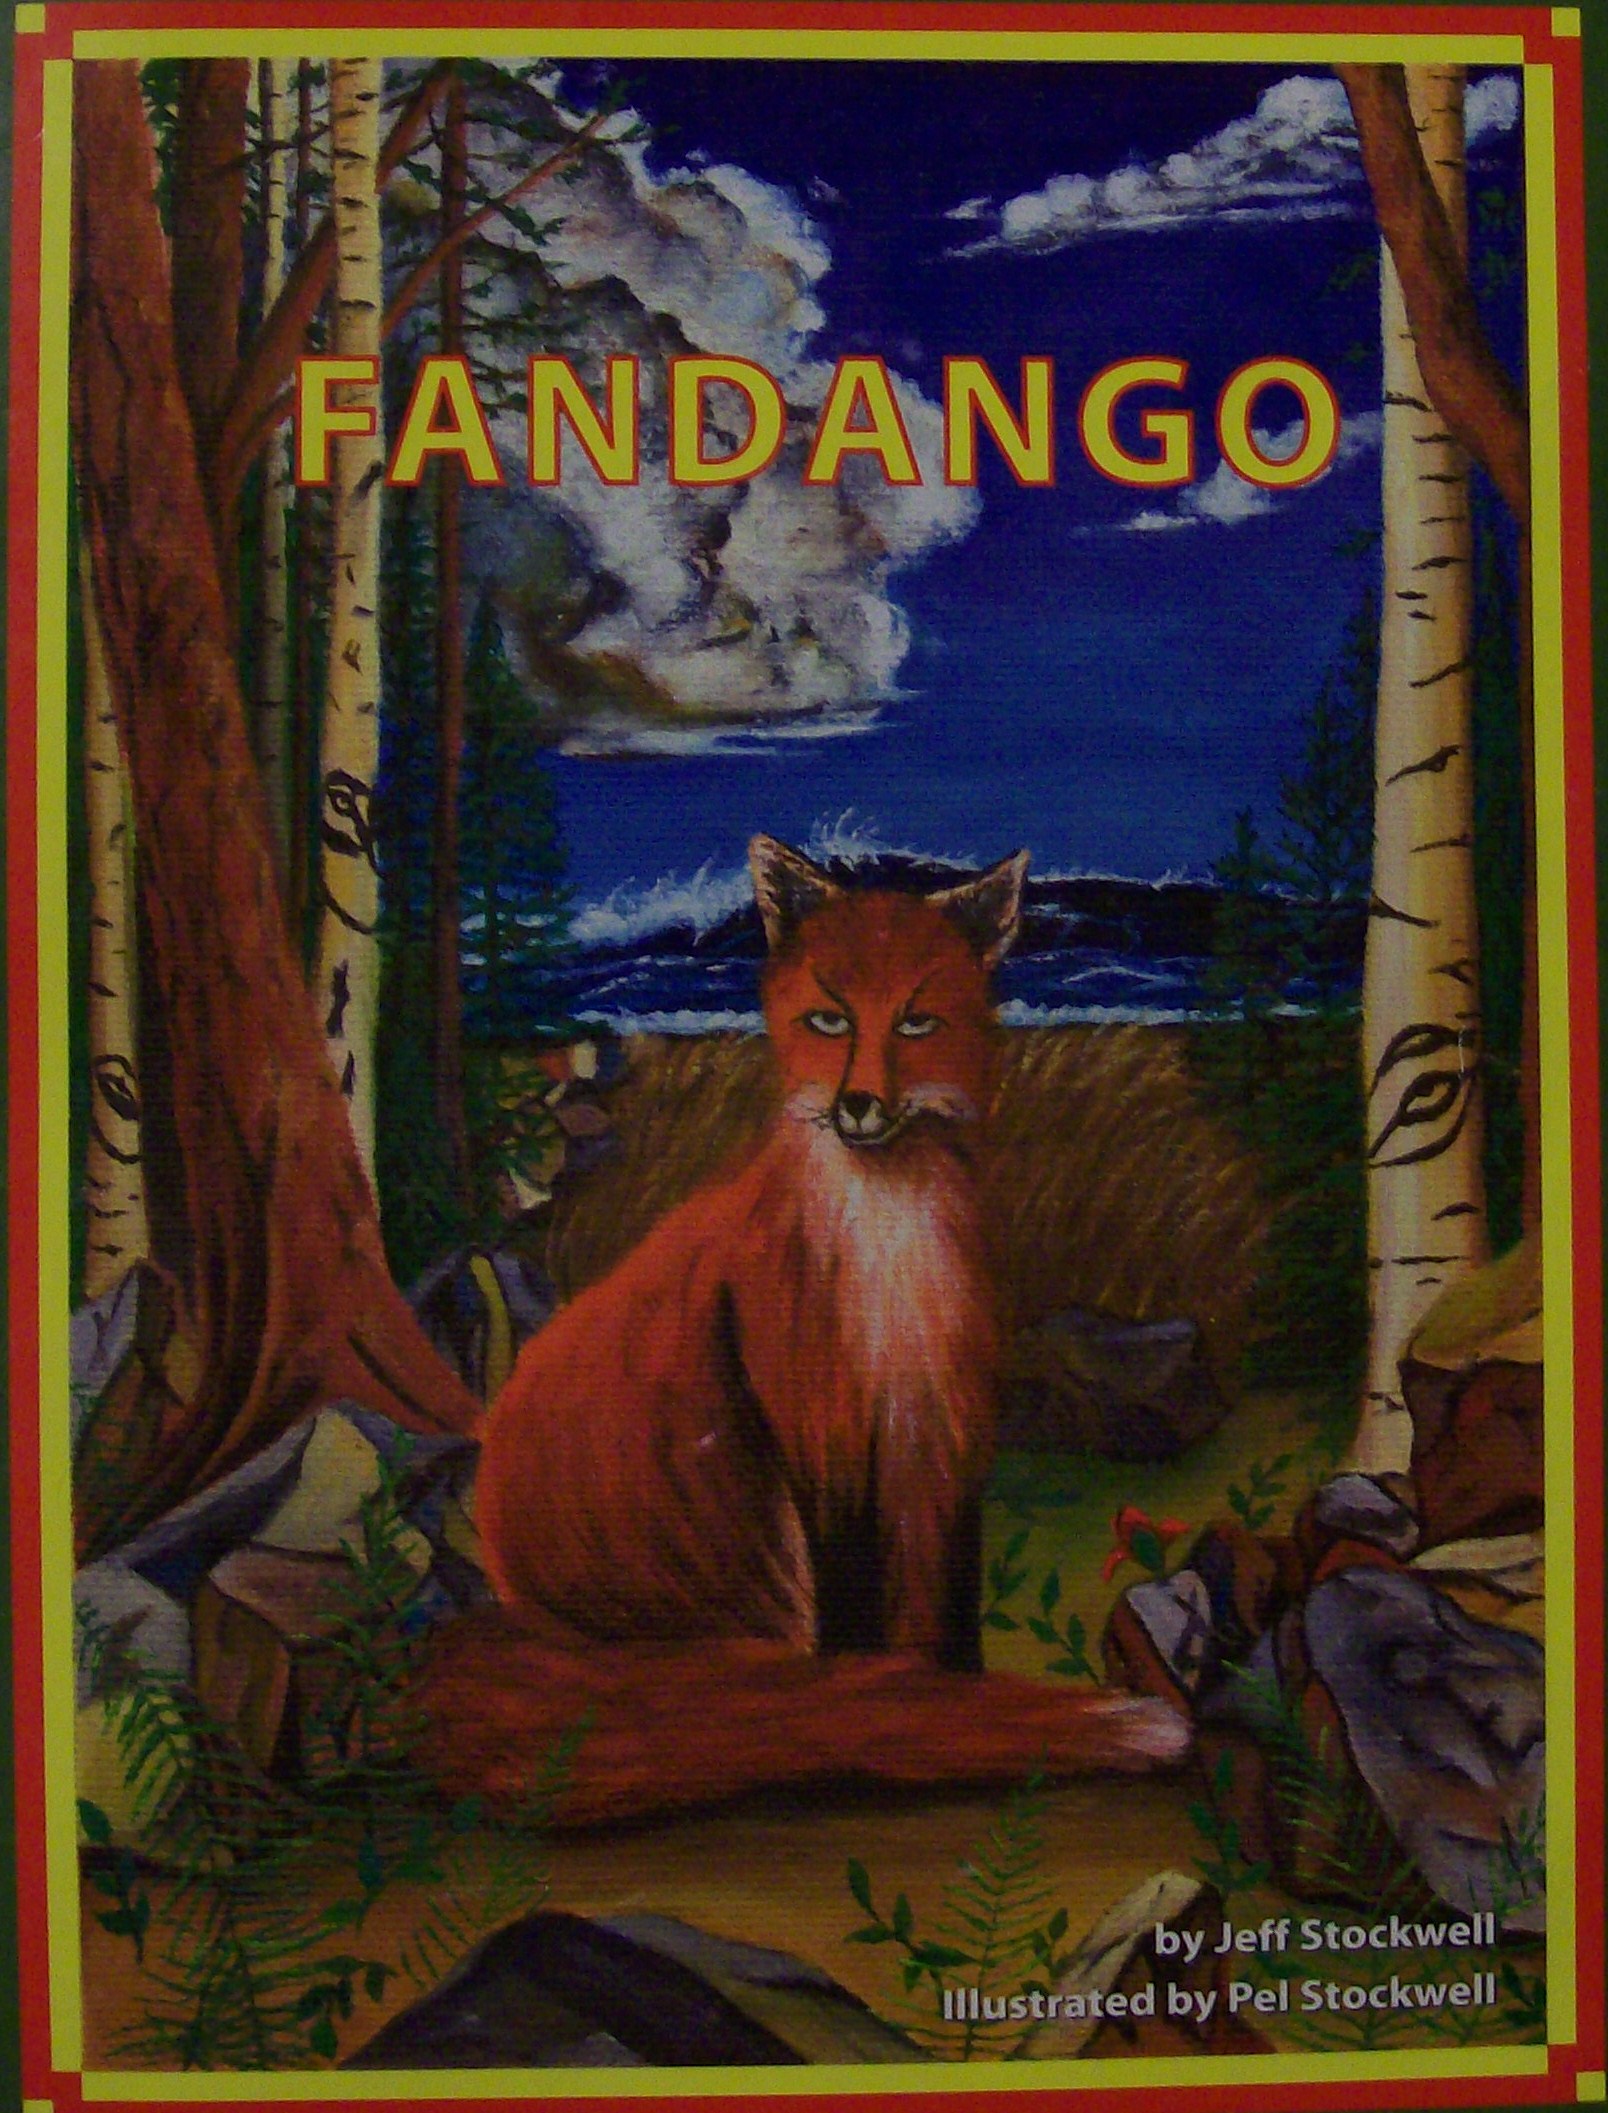 Fandango: The Key to the Wind